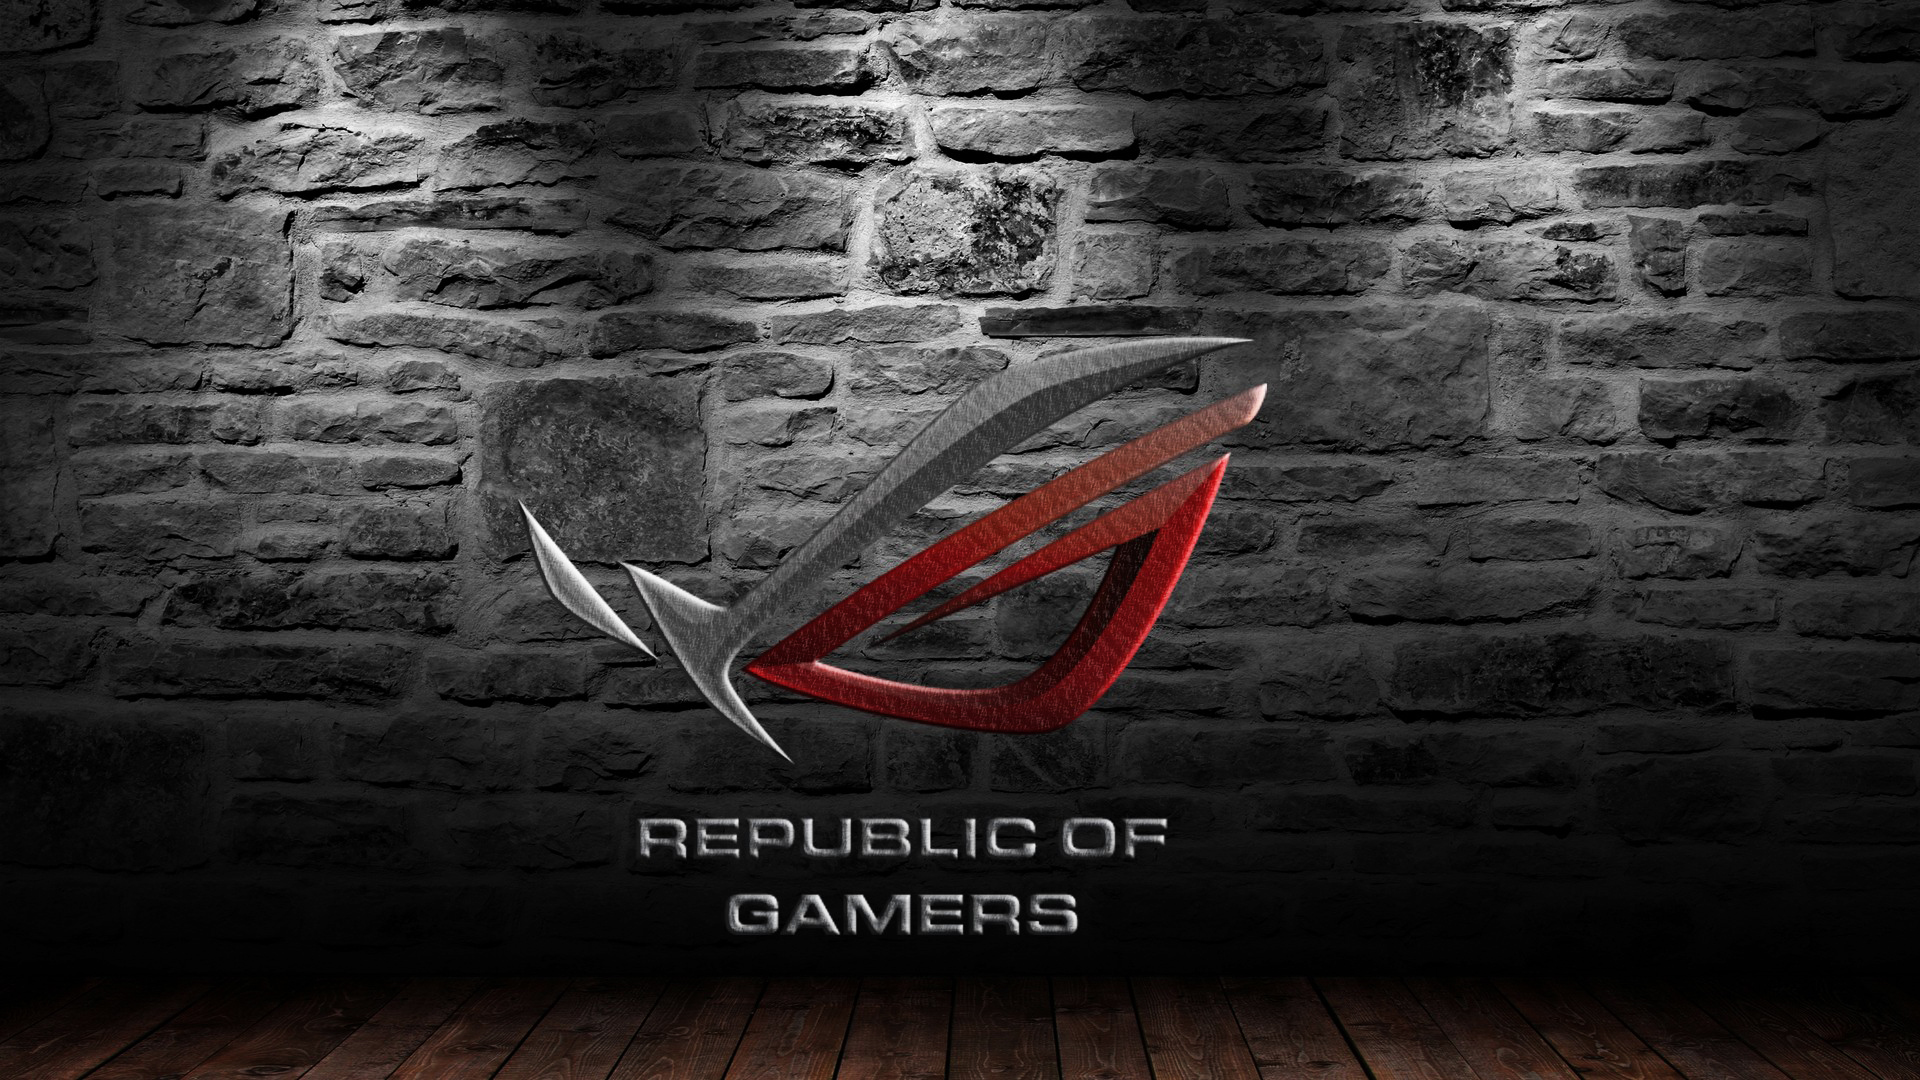 Asus Rog Republic Of Gamers Logo Hd 1920x1080 1080p Wallpaper And